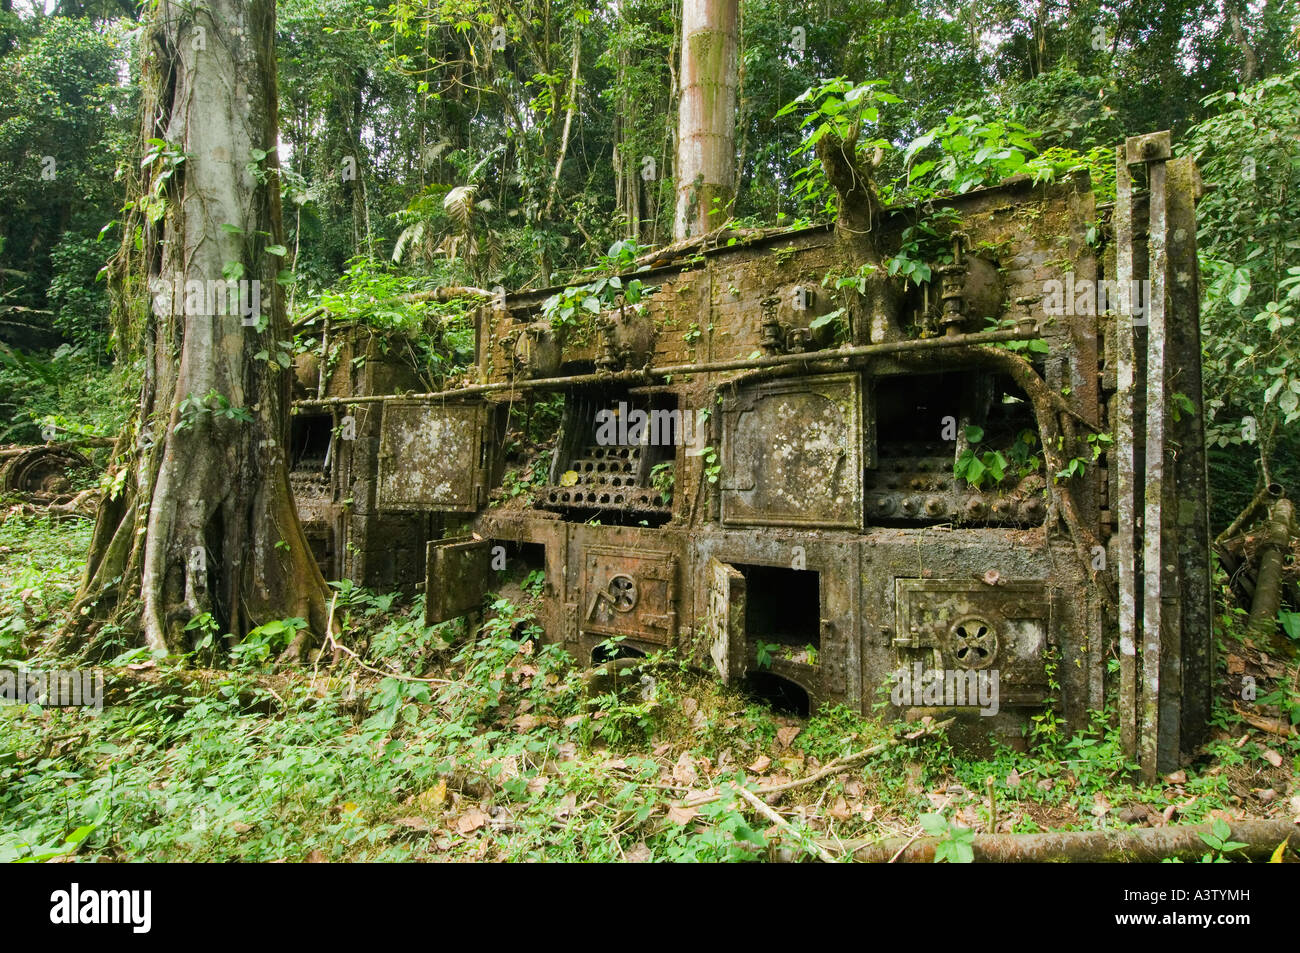 Panama, Darien National Park, Cana area, ruins of Espiritu Santo (Holy Ghost) Gold Mine, Mining equipment abandoned in jungle Stock Photo